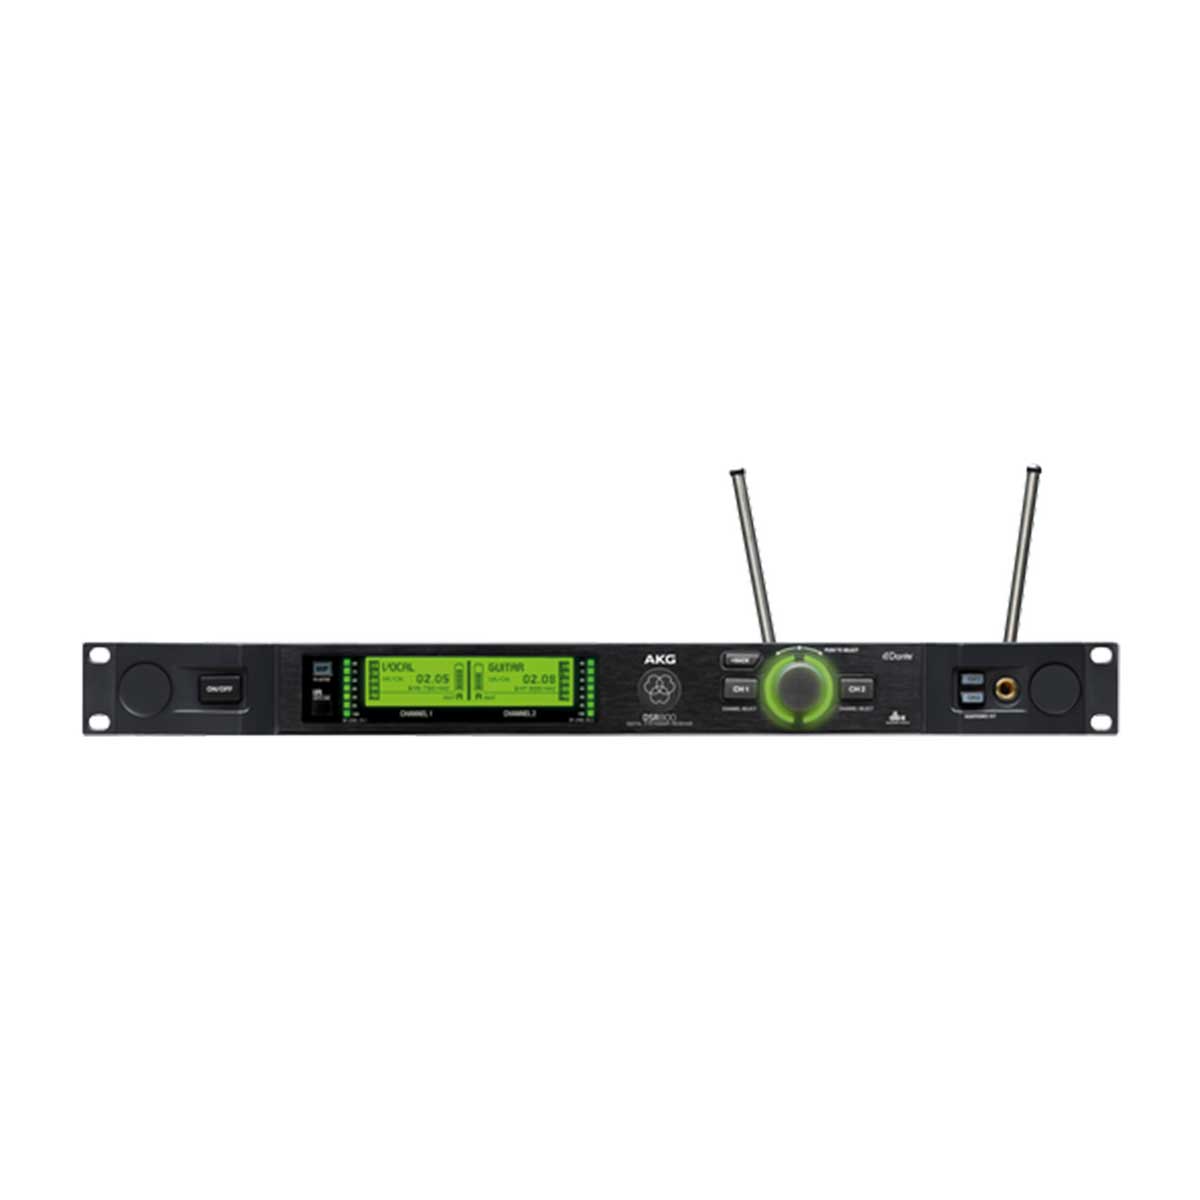 AKG DSR800 Reference digital wireless stationary receiver